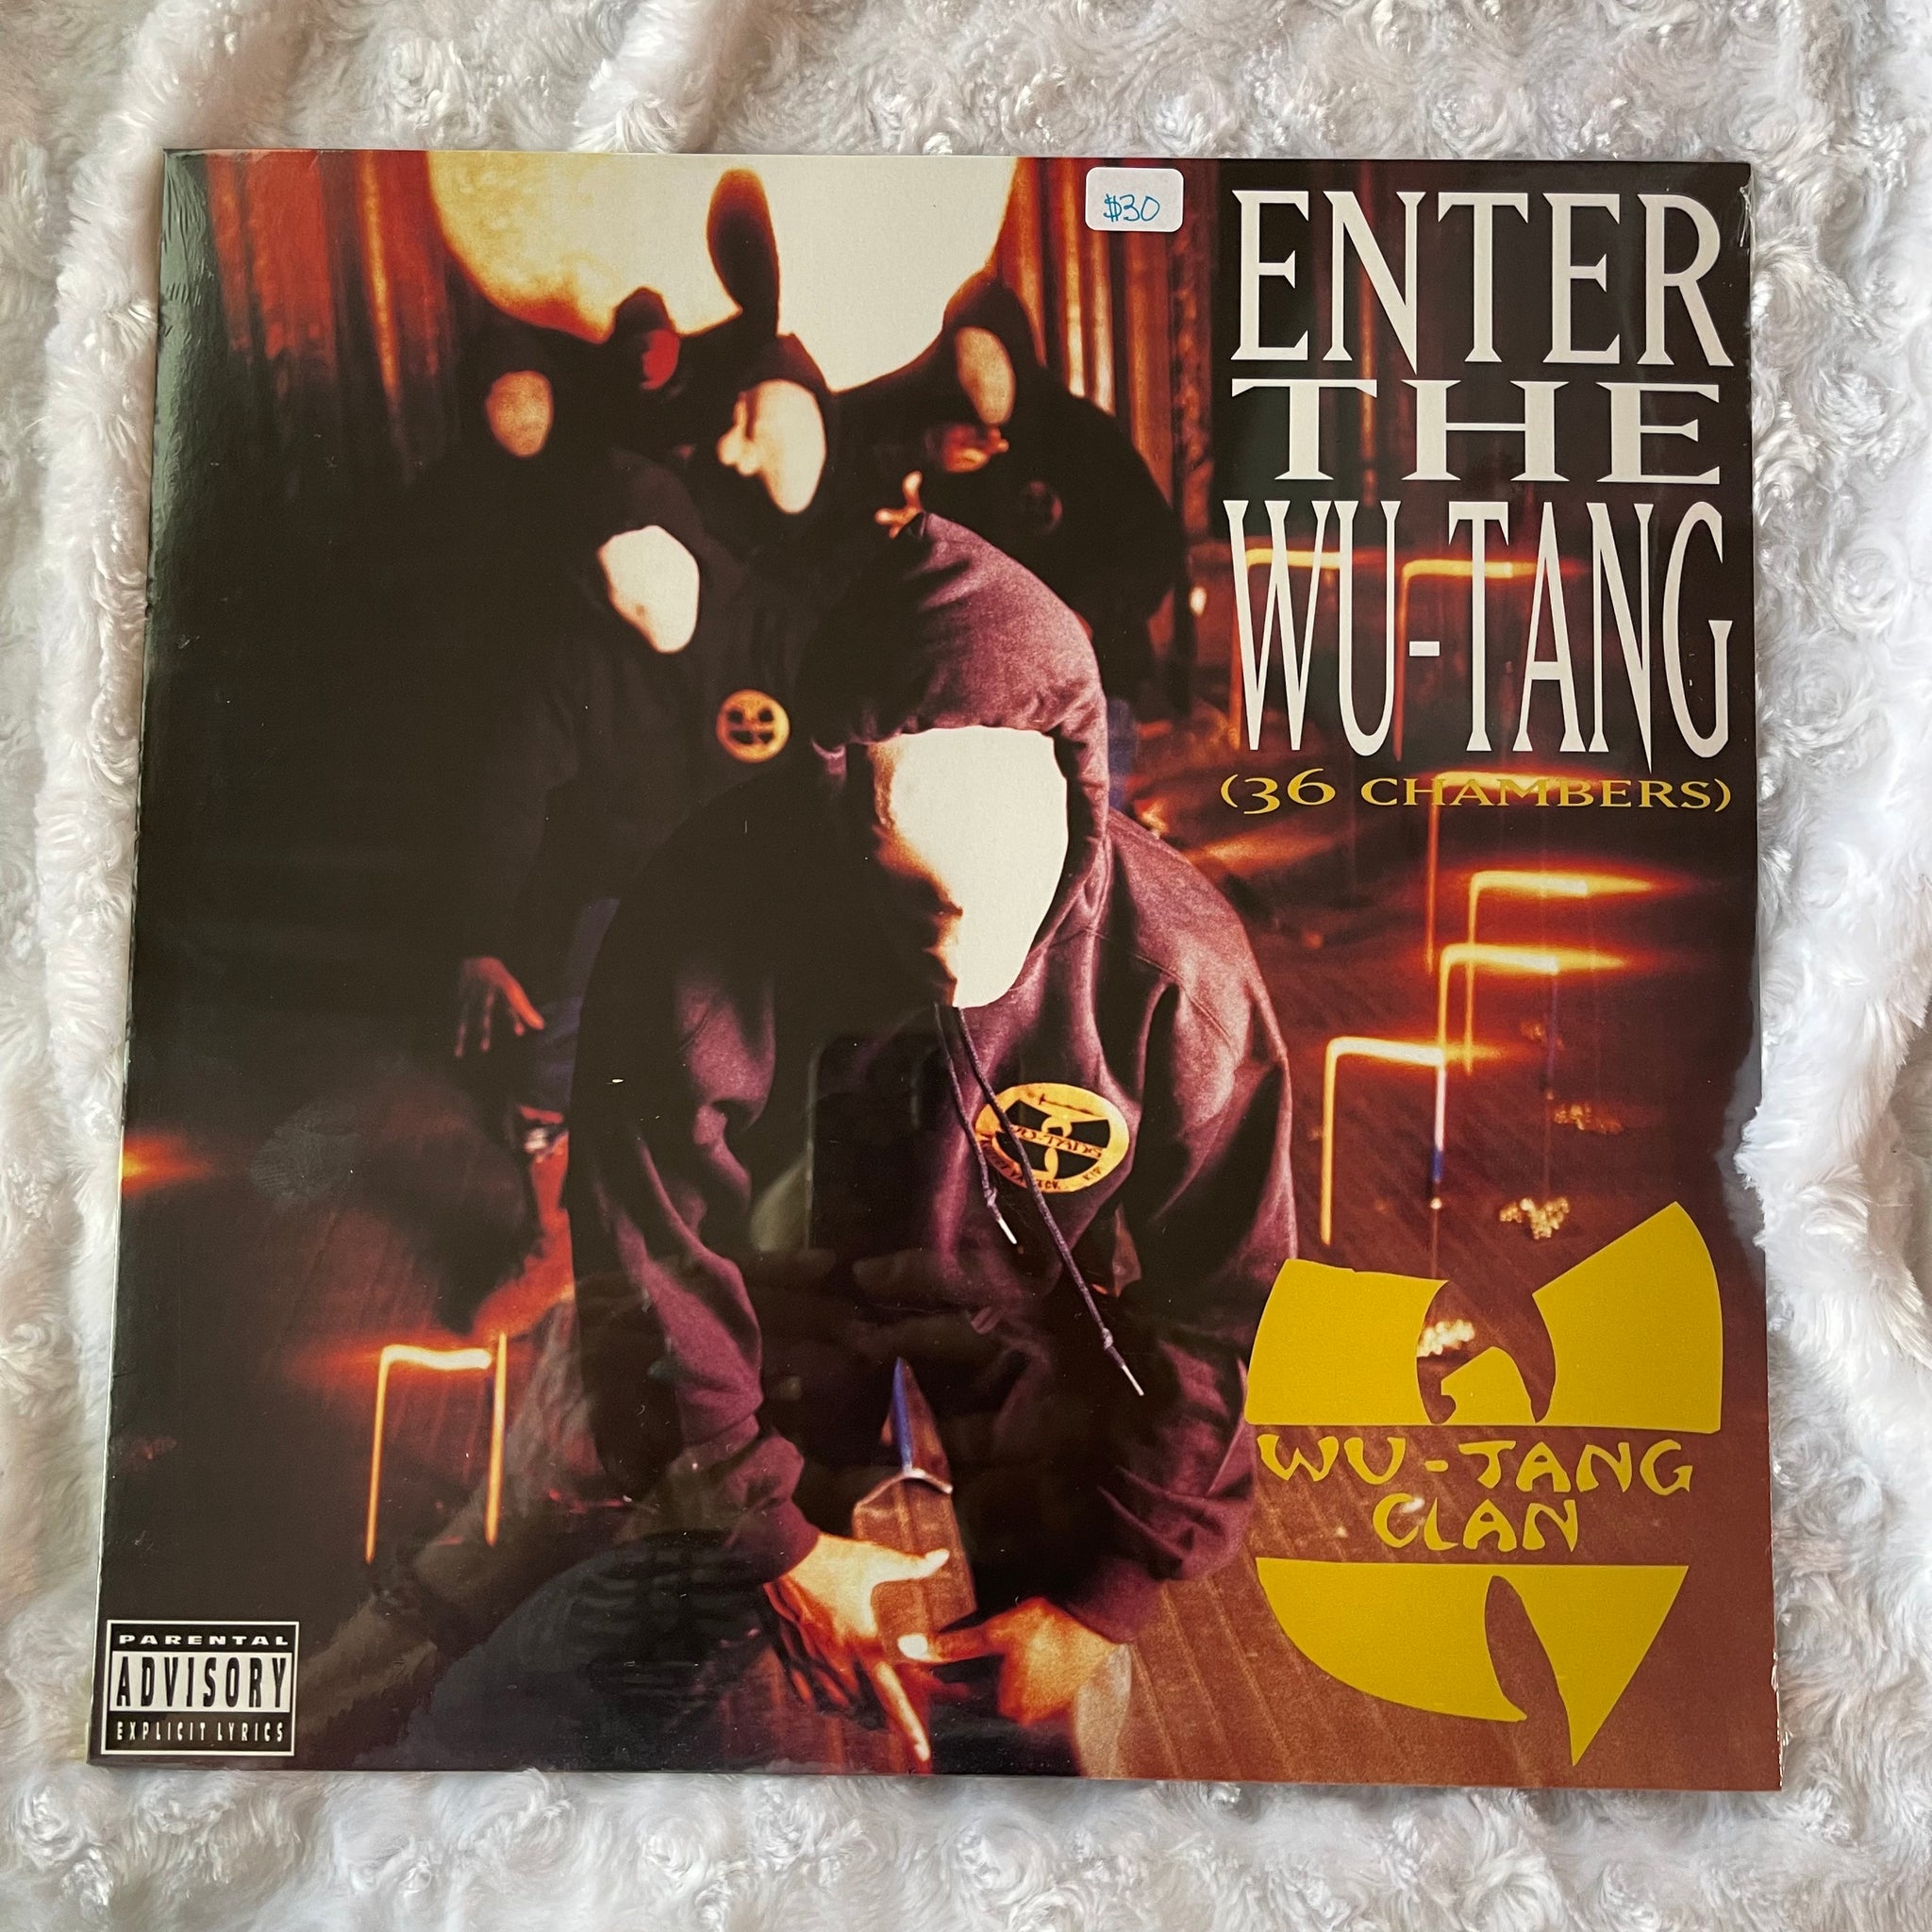 Wu-Tang Clan-Enter the Wu-Tang (36 Chambers) SEALED